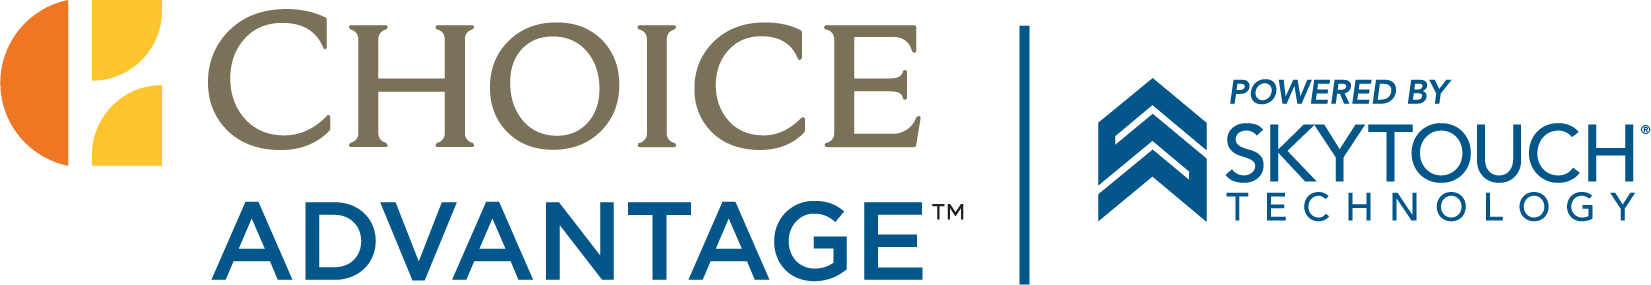 choiceADVANTAGE logo